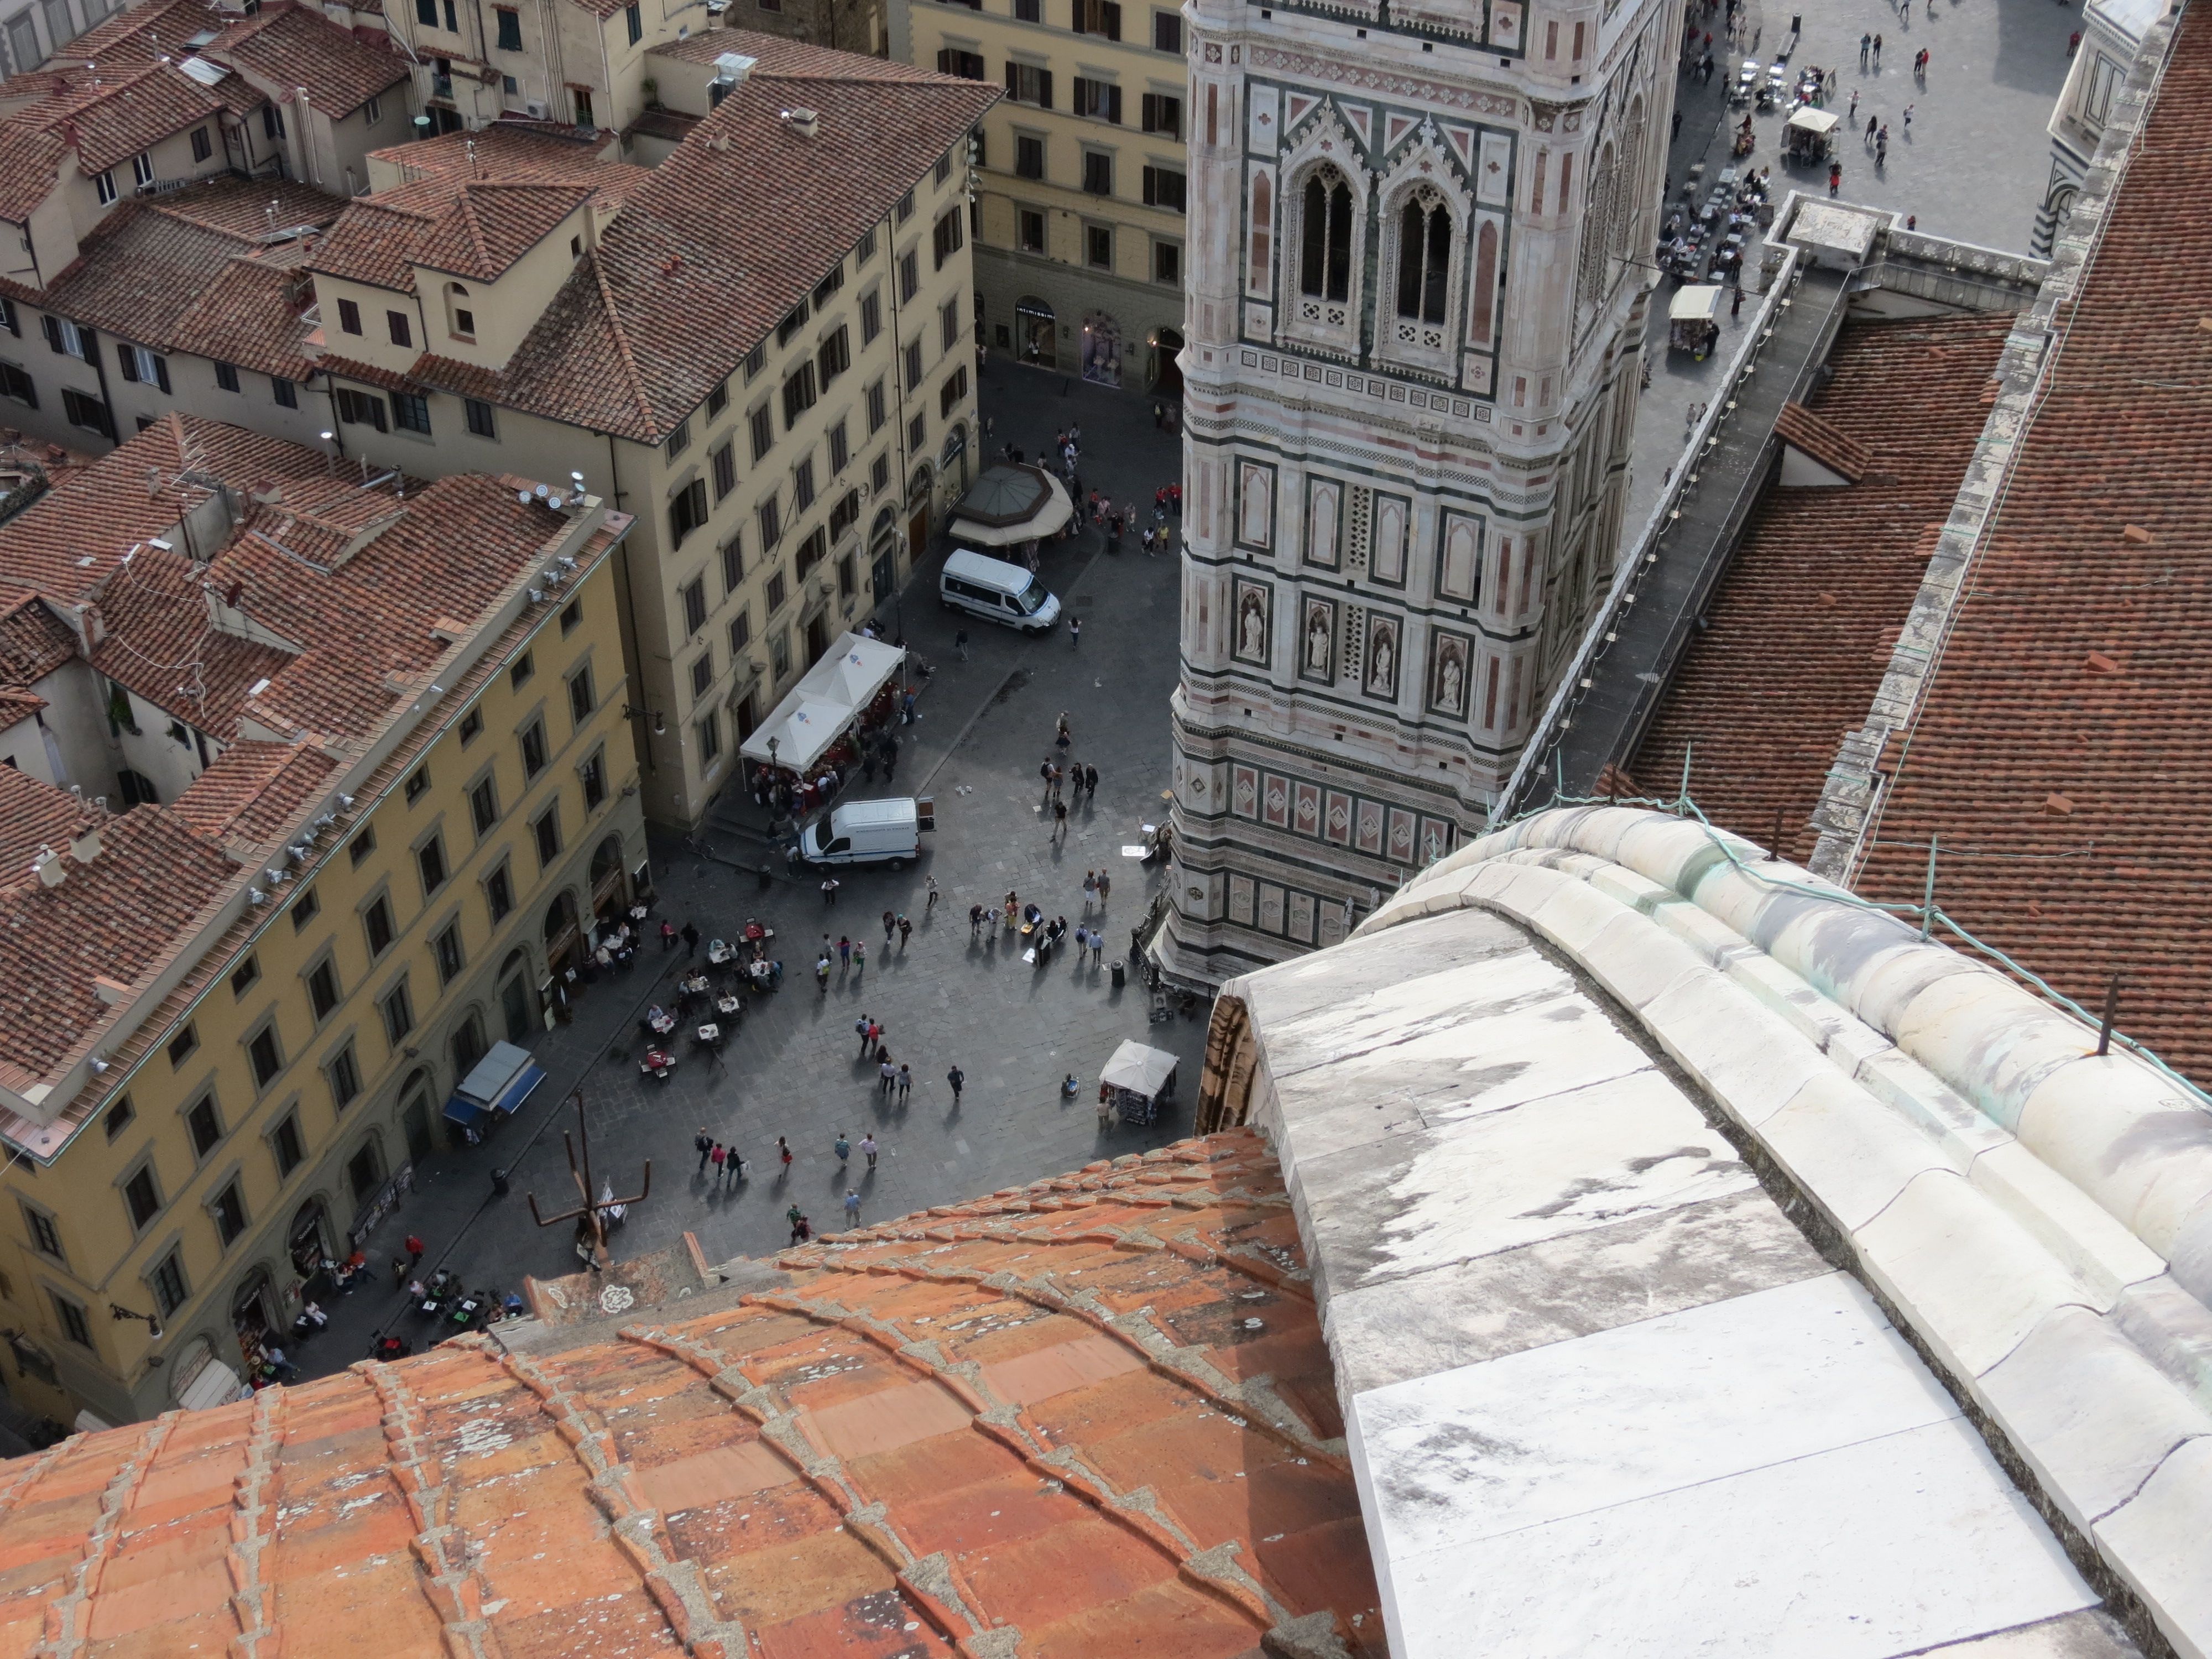 Vertiginous view from Duomo roof